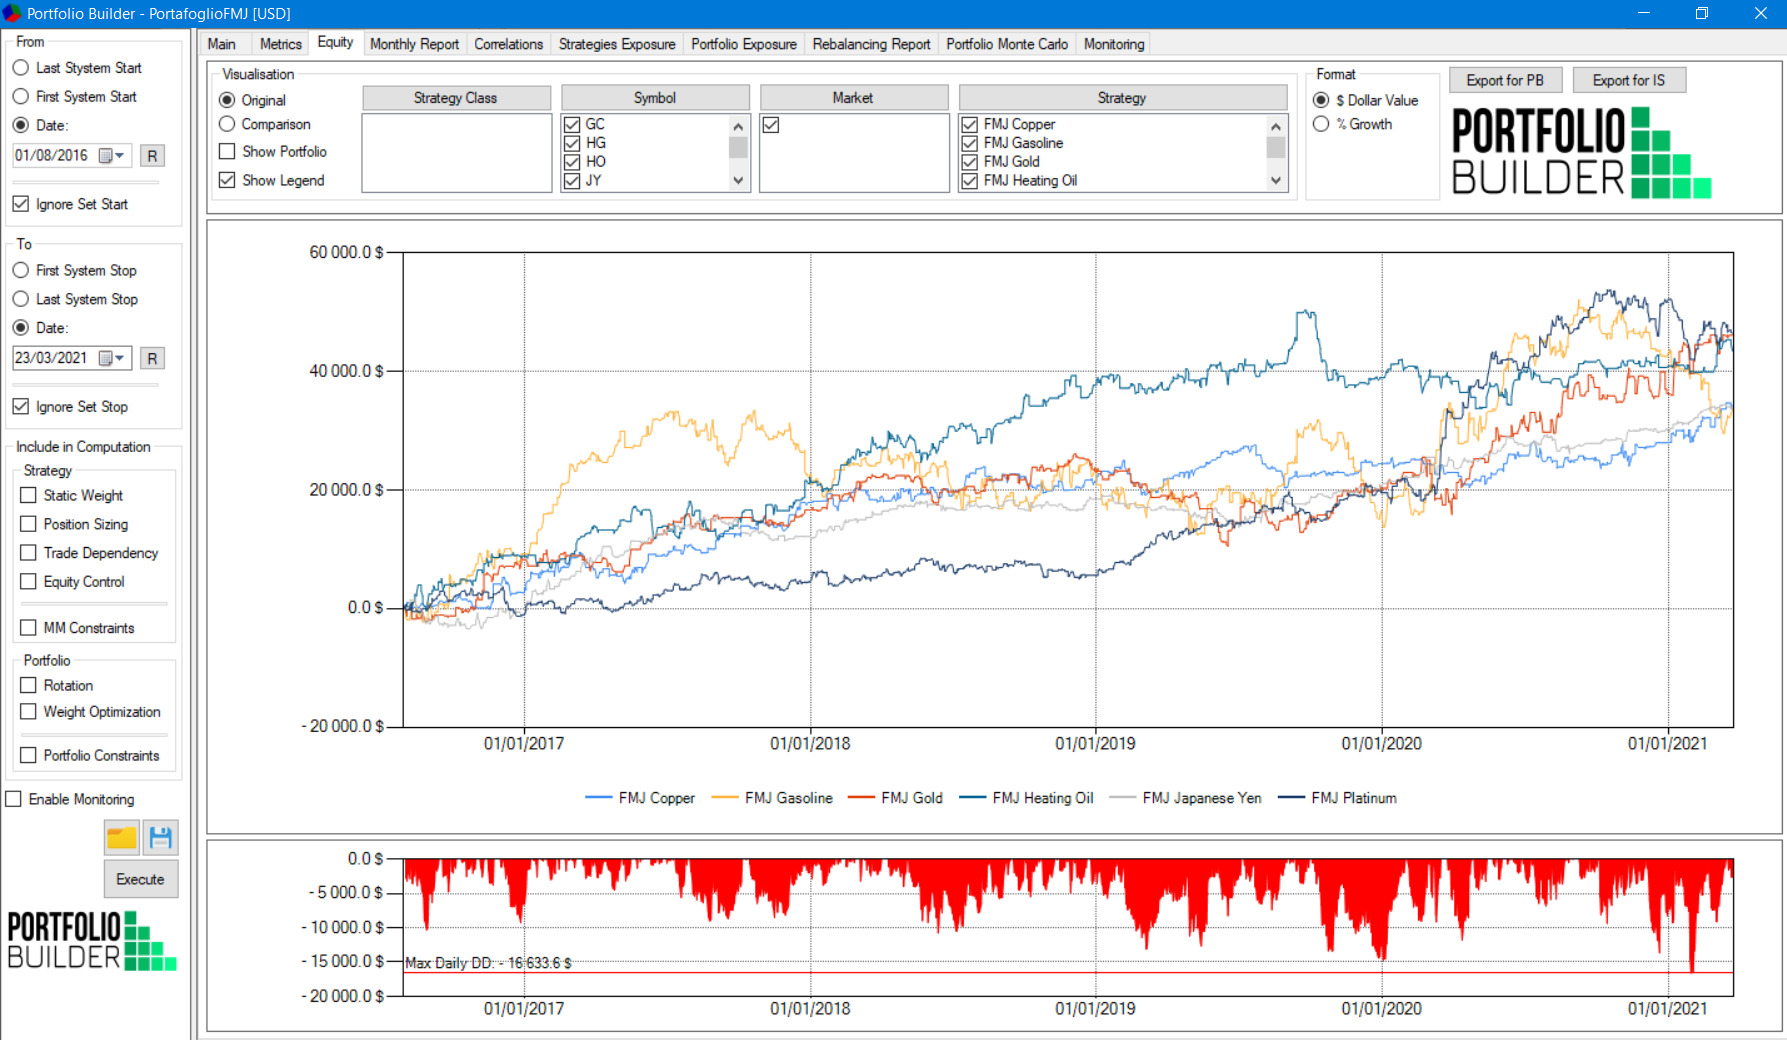 portfolio result full metal jacket: automated trading system, open code trading system, trading strategy gold